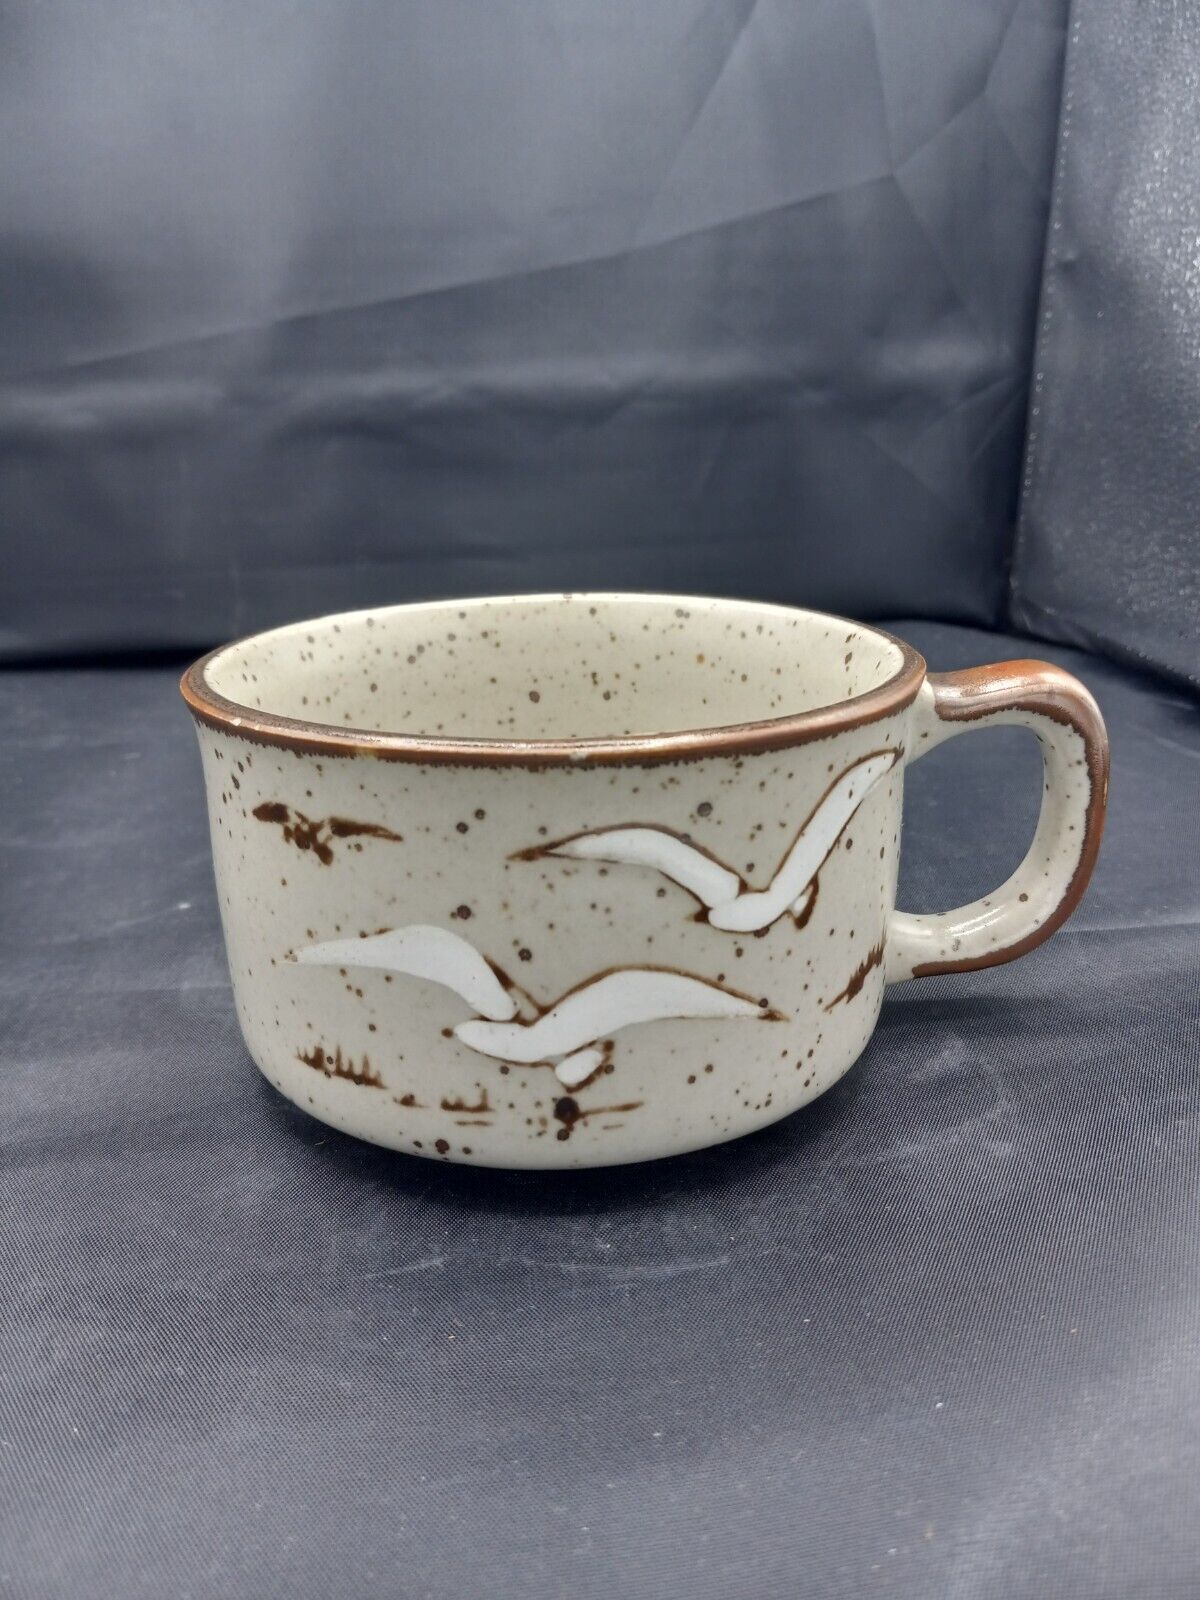 New Labels Otagiri Seagull Soup Mug Stoneware Japan Hand Painted Vintage